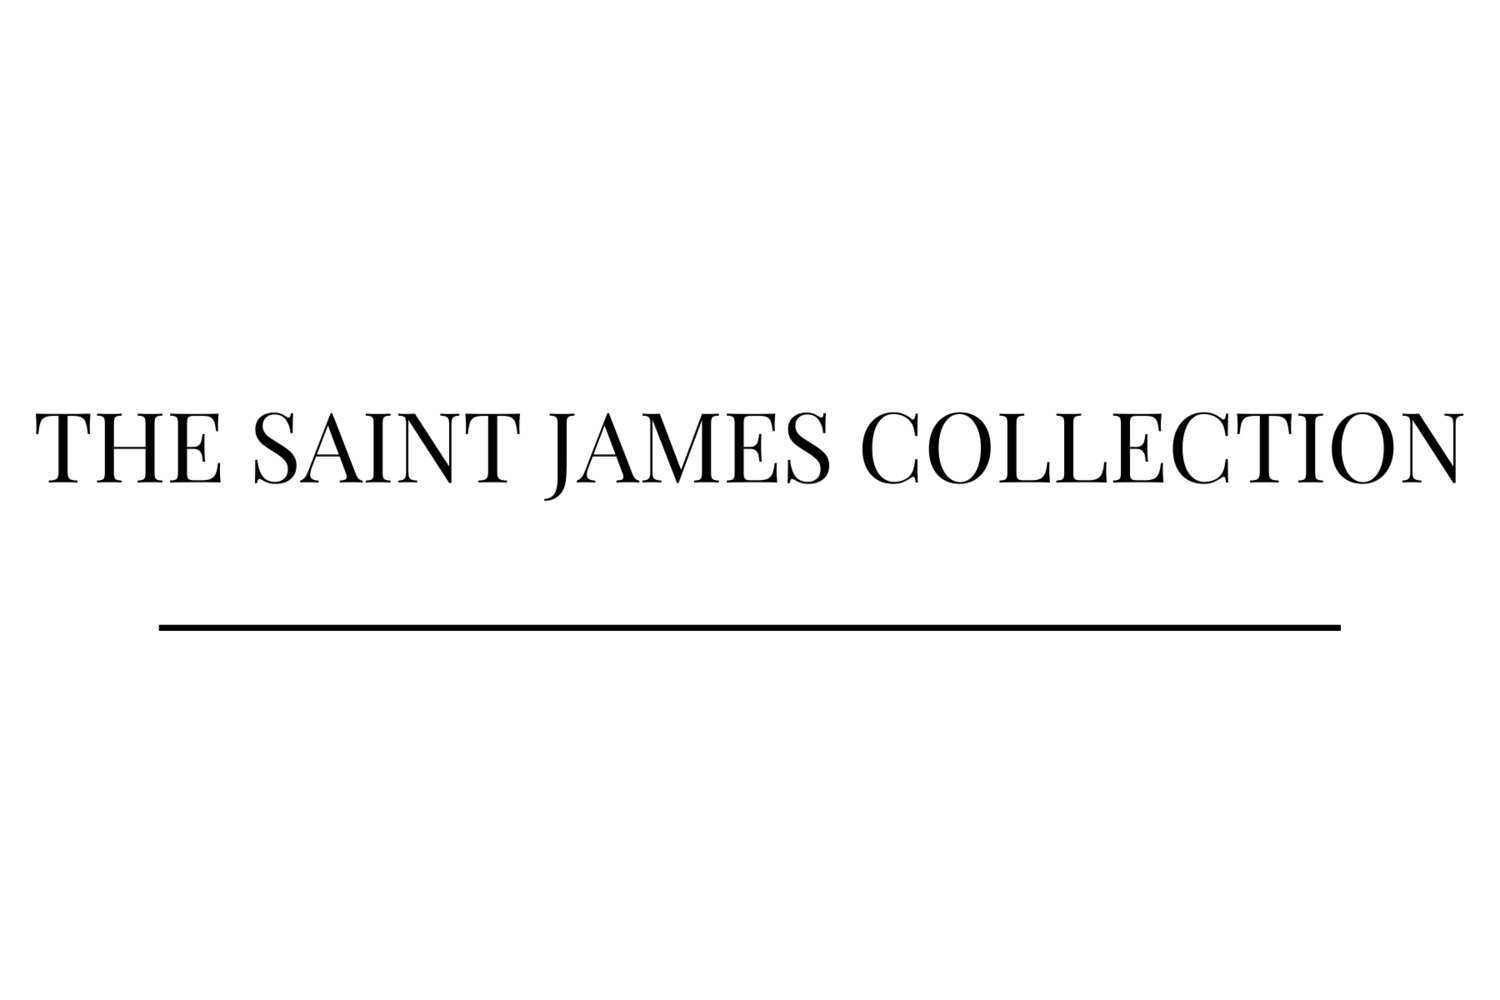 THE SAINT JAMES COLLECTION